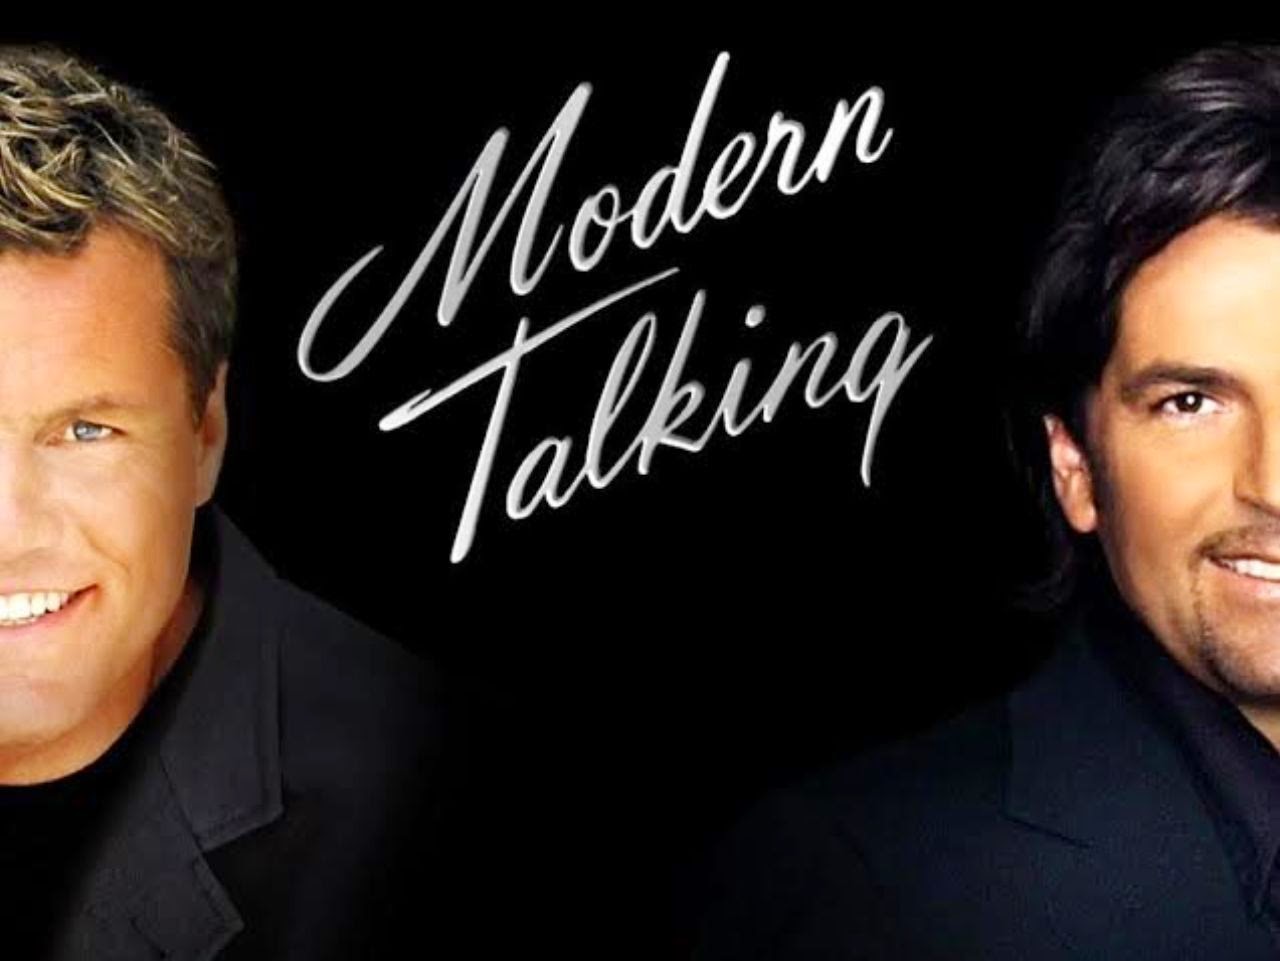 Модерн токинг мп3 лучшее. Группа Modern talking. Modern talking 1996. Солист Модерн токинг. Группа Modern talking 2021.